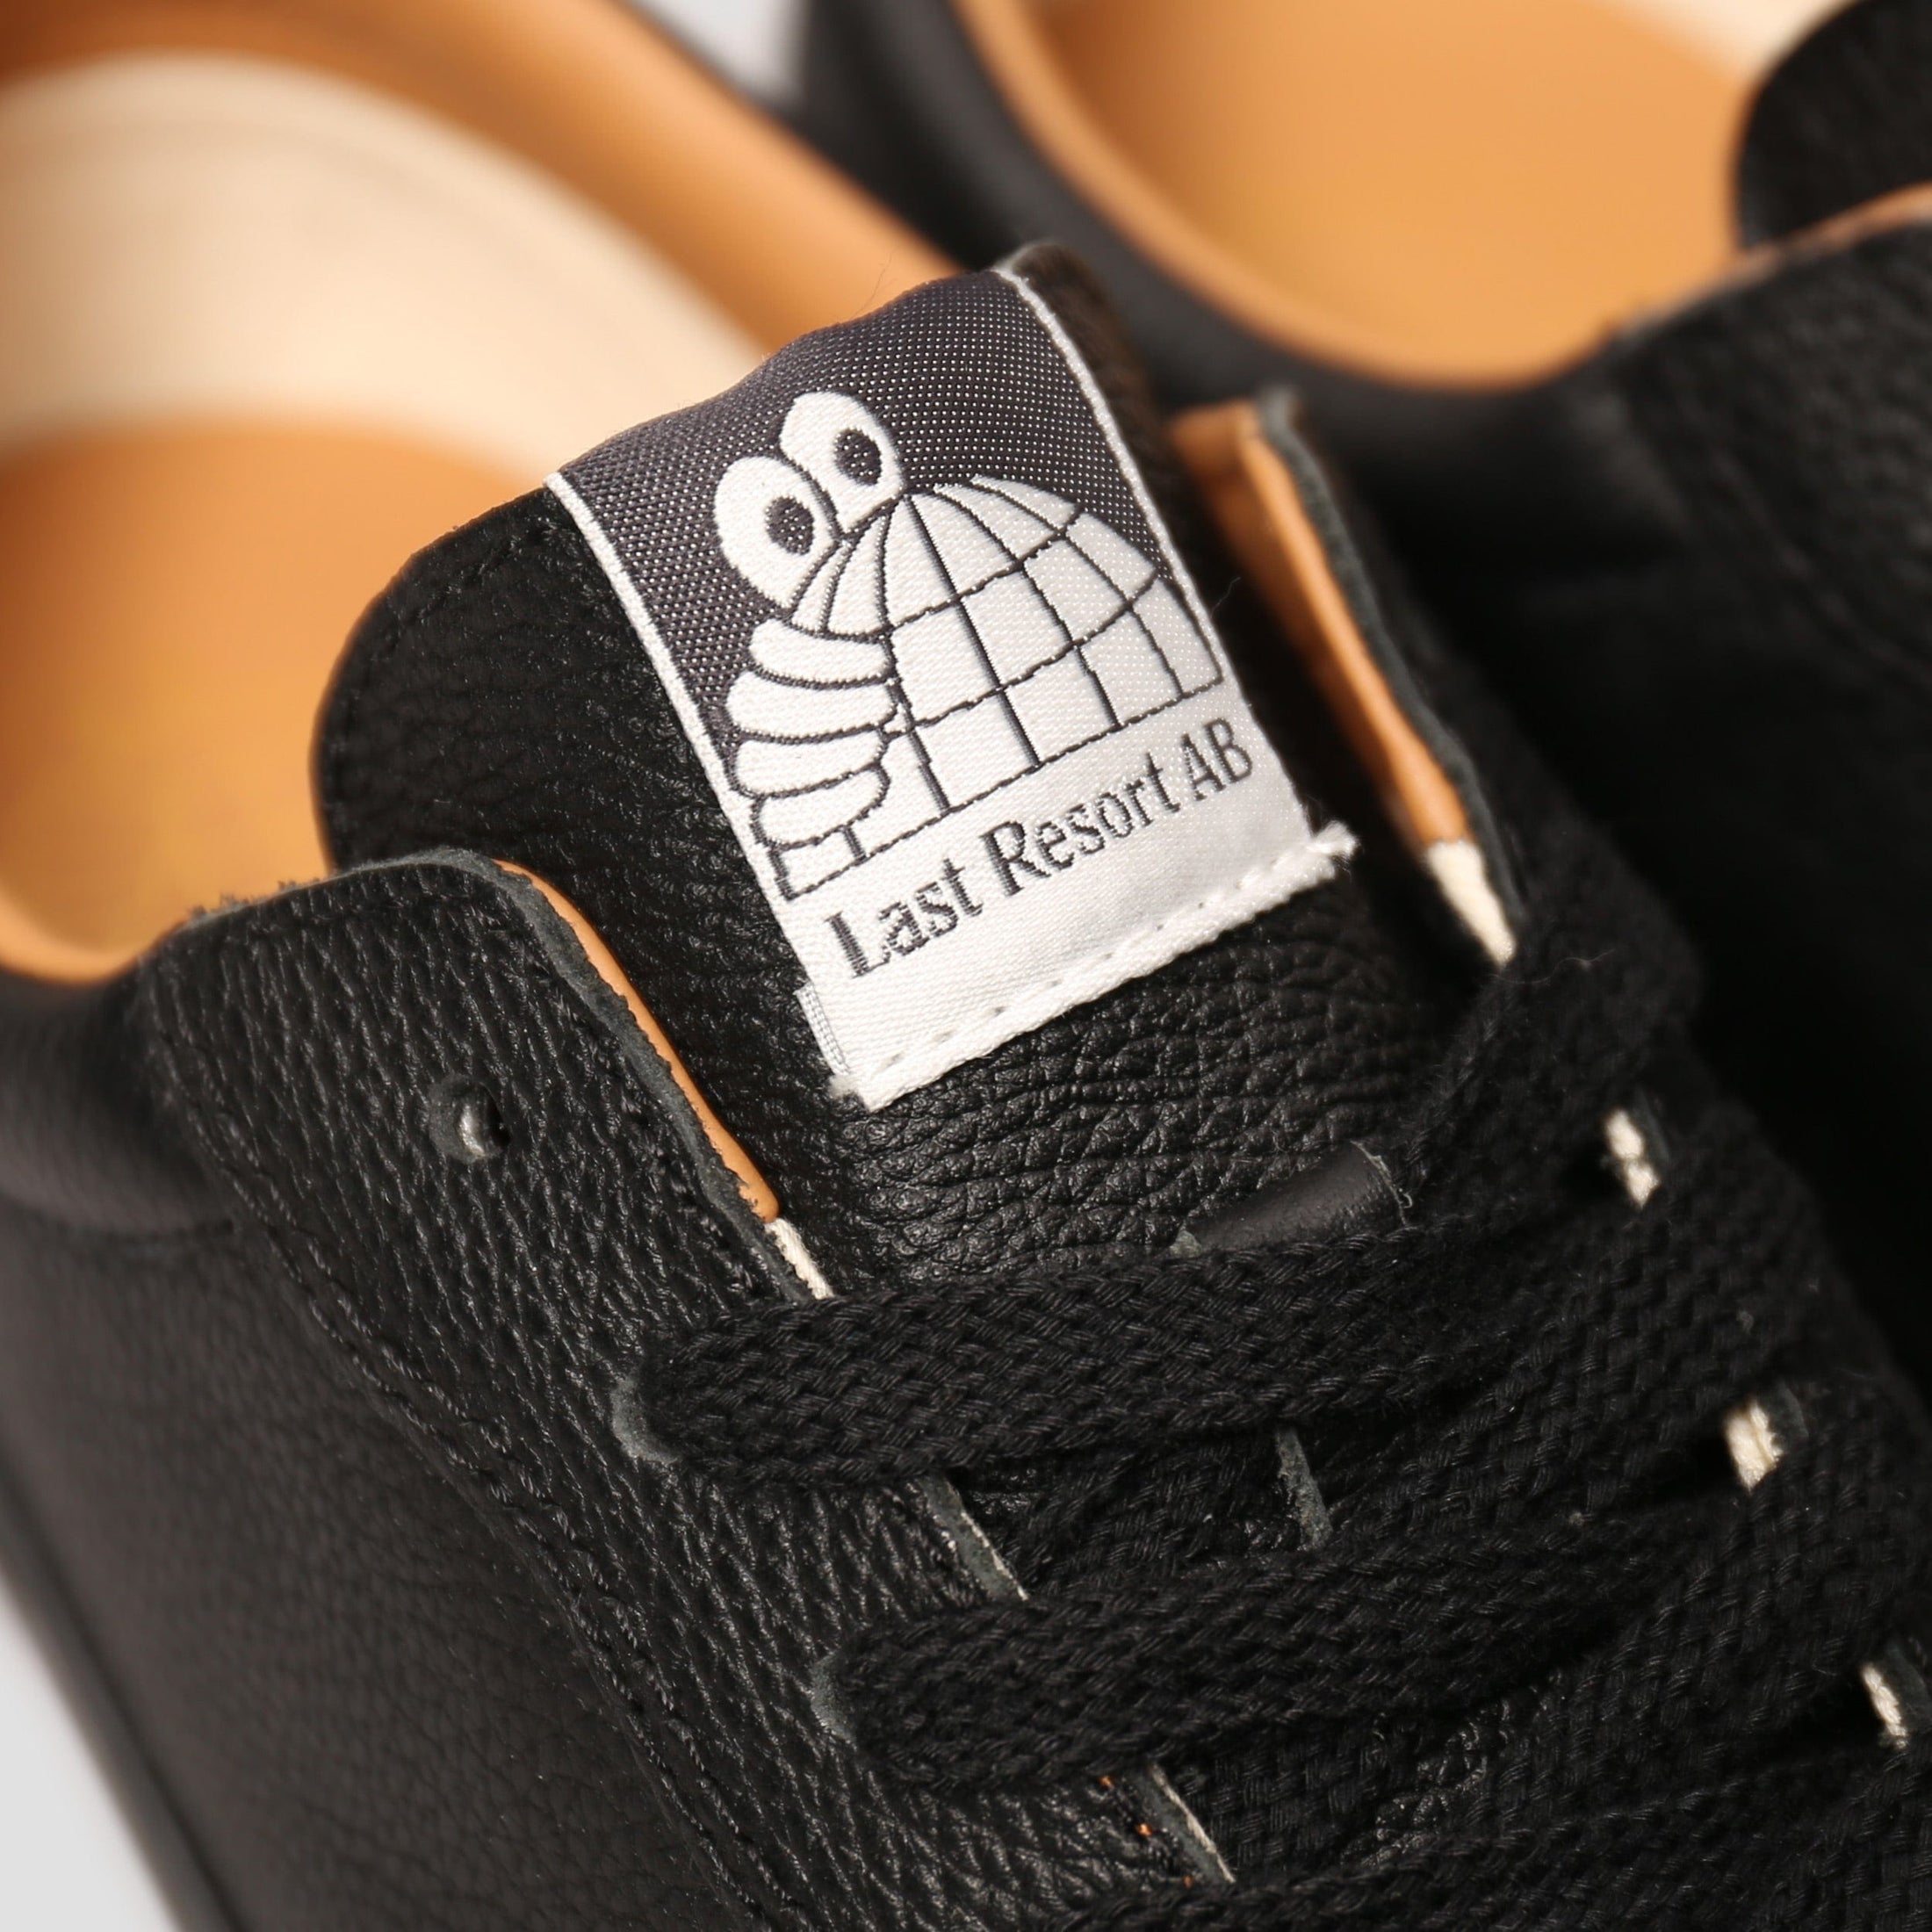 Last Resort VM001 Mill Leather Lo Shoes Black / Black